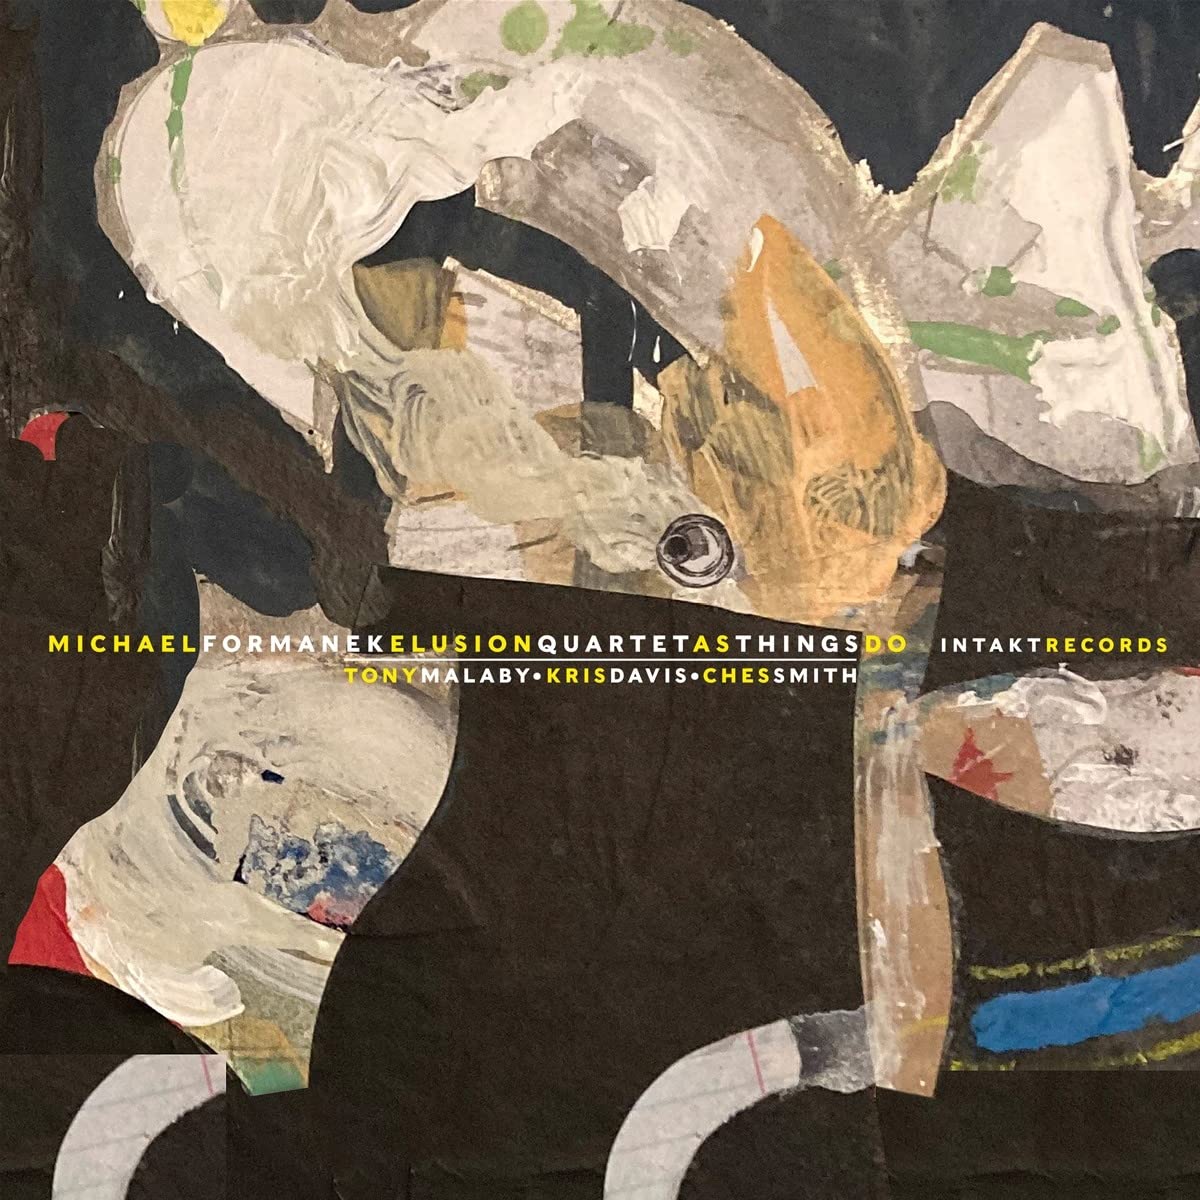 MICHAEL FORMANEK - Michael Formanek Elusion Quartet : As Things Do cover 